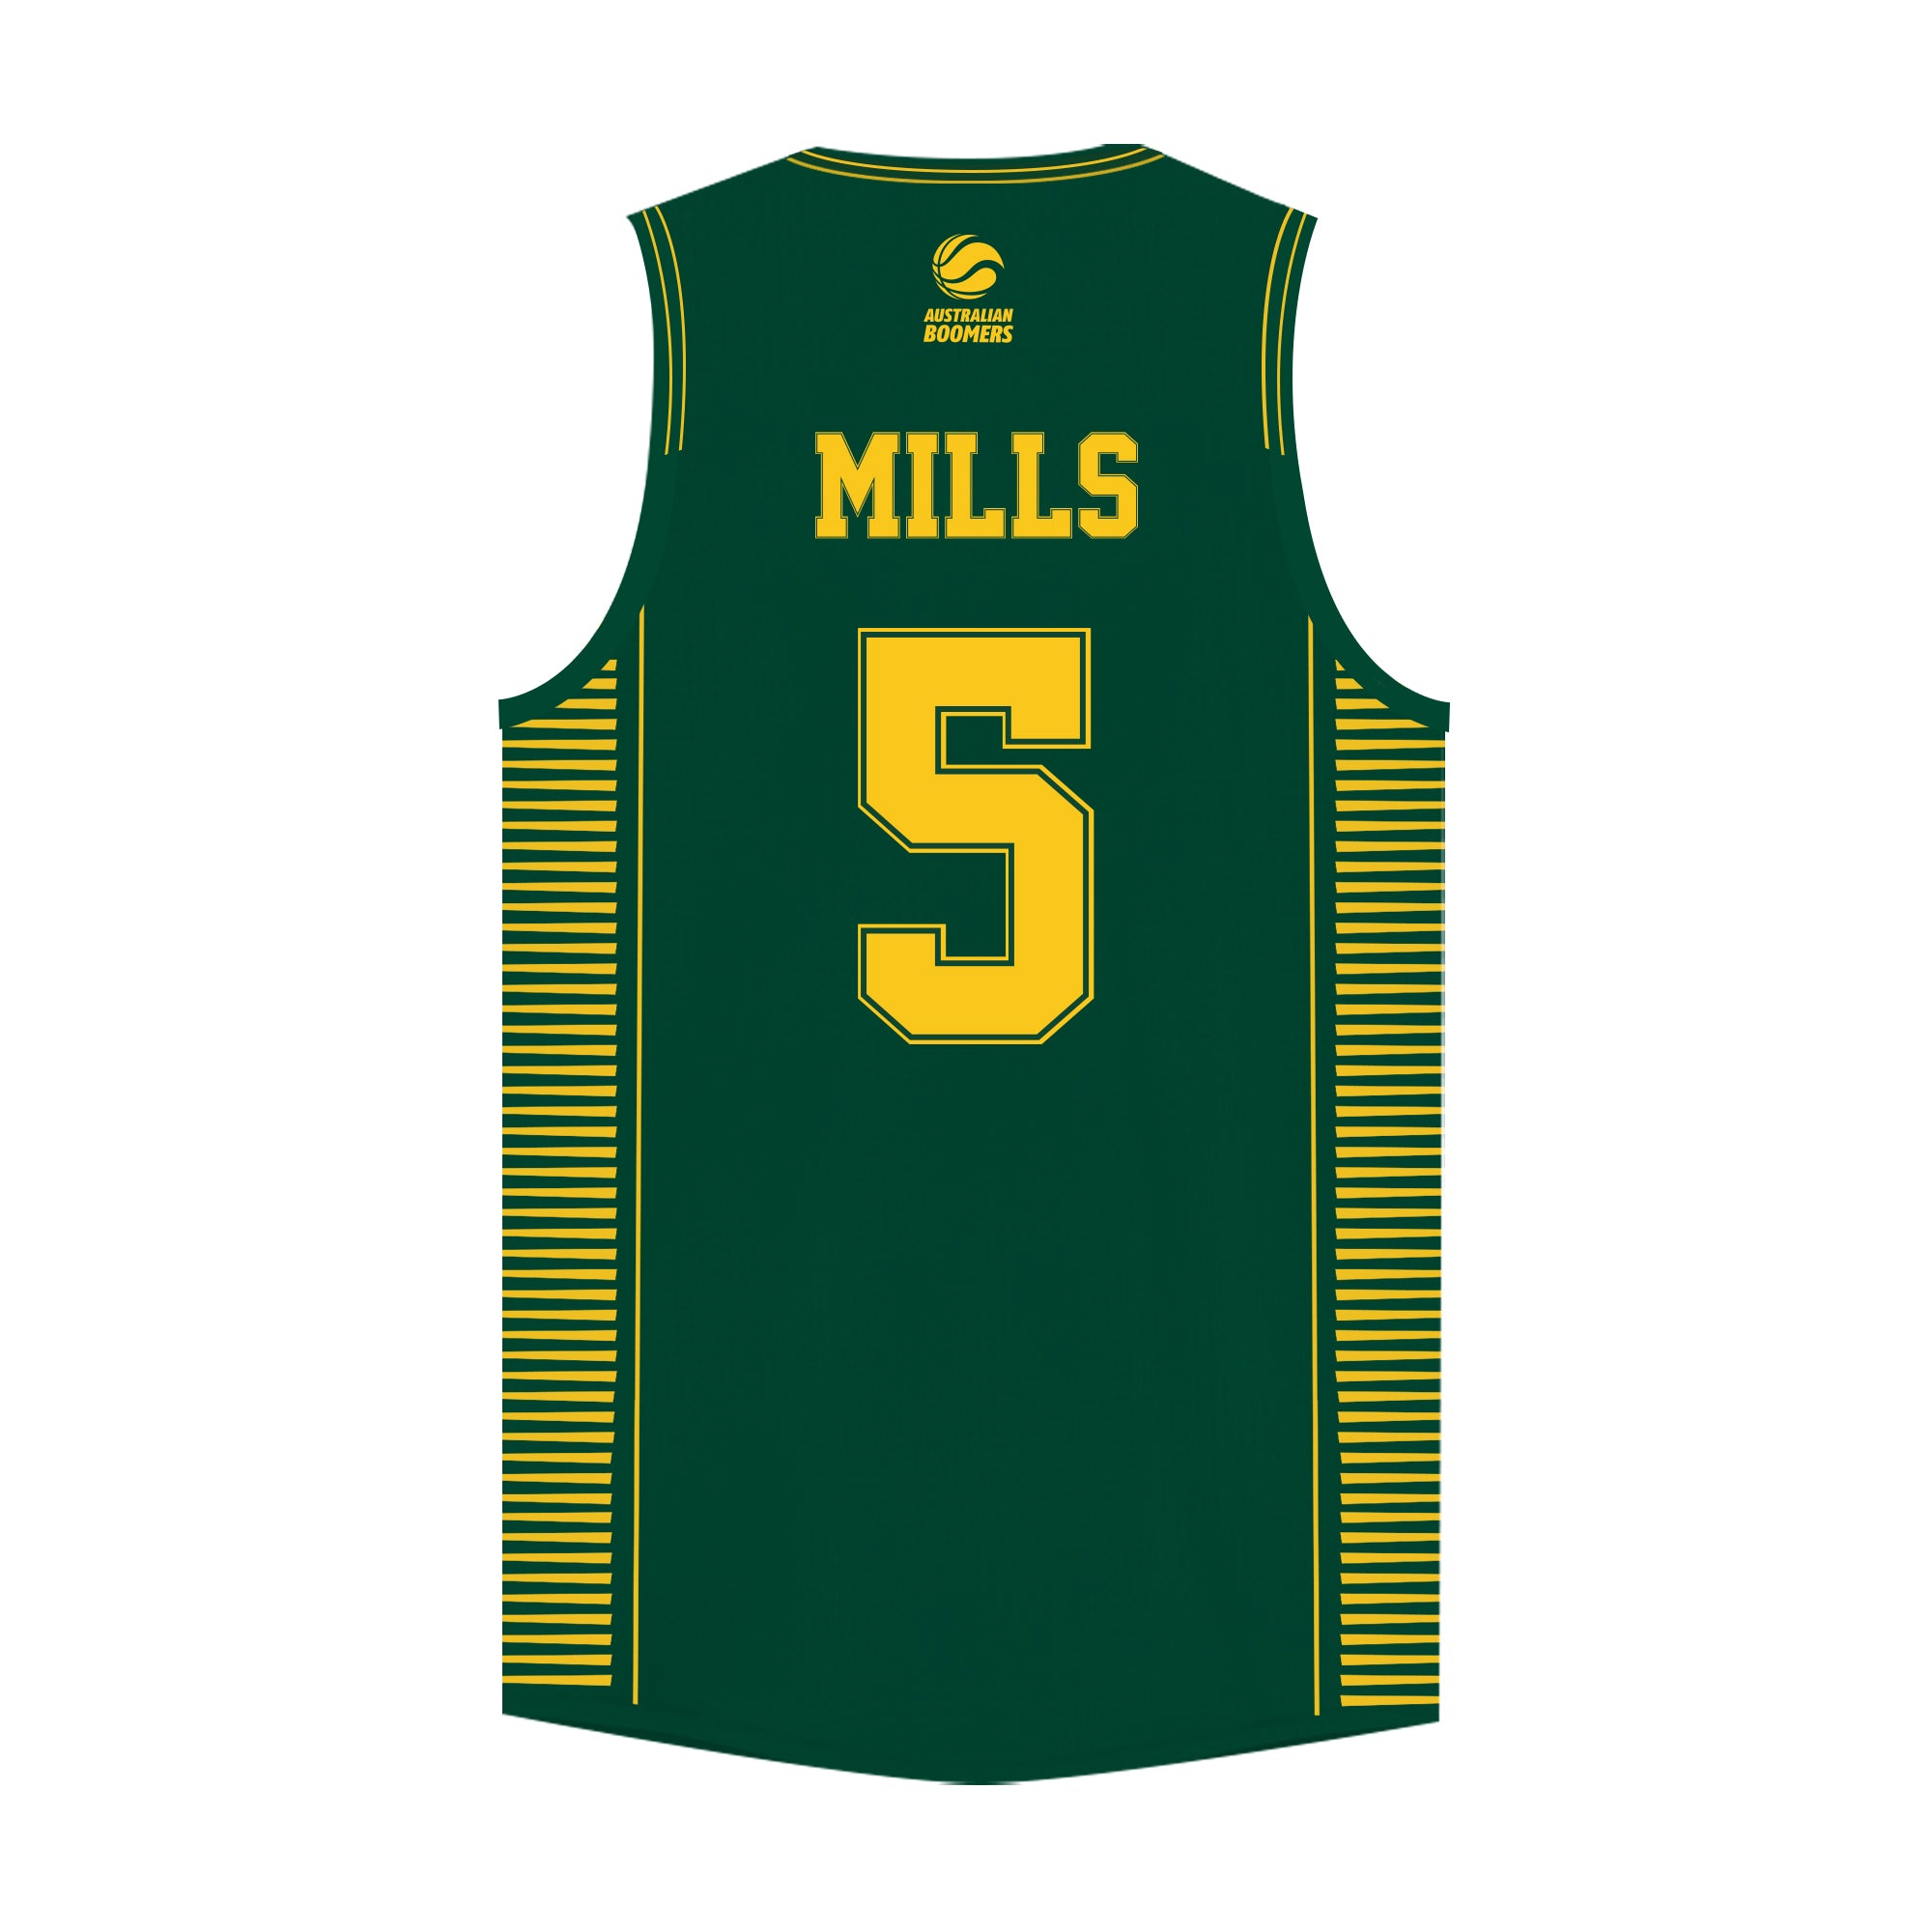 Custom Patty Mills #5 Team Australia Basketball Jersey Green